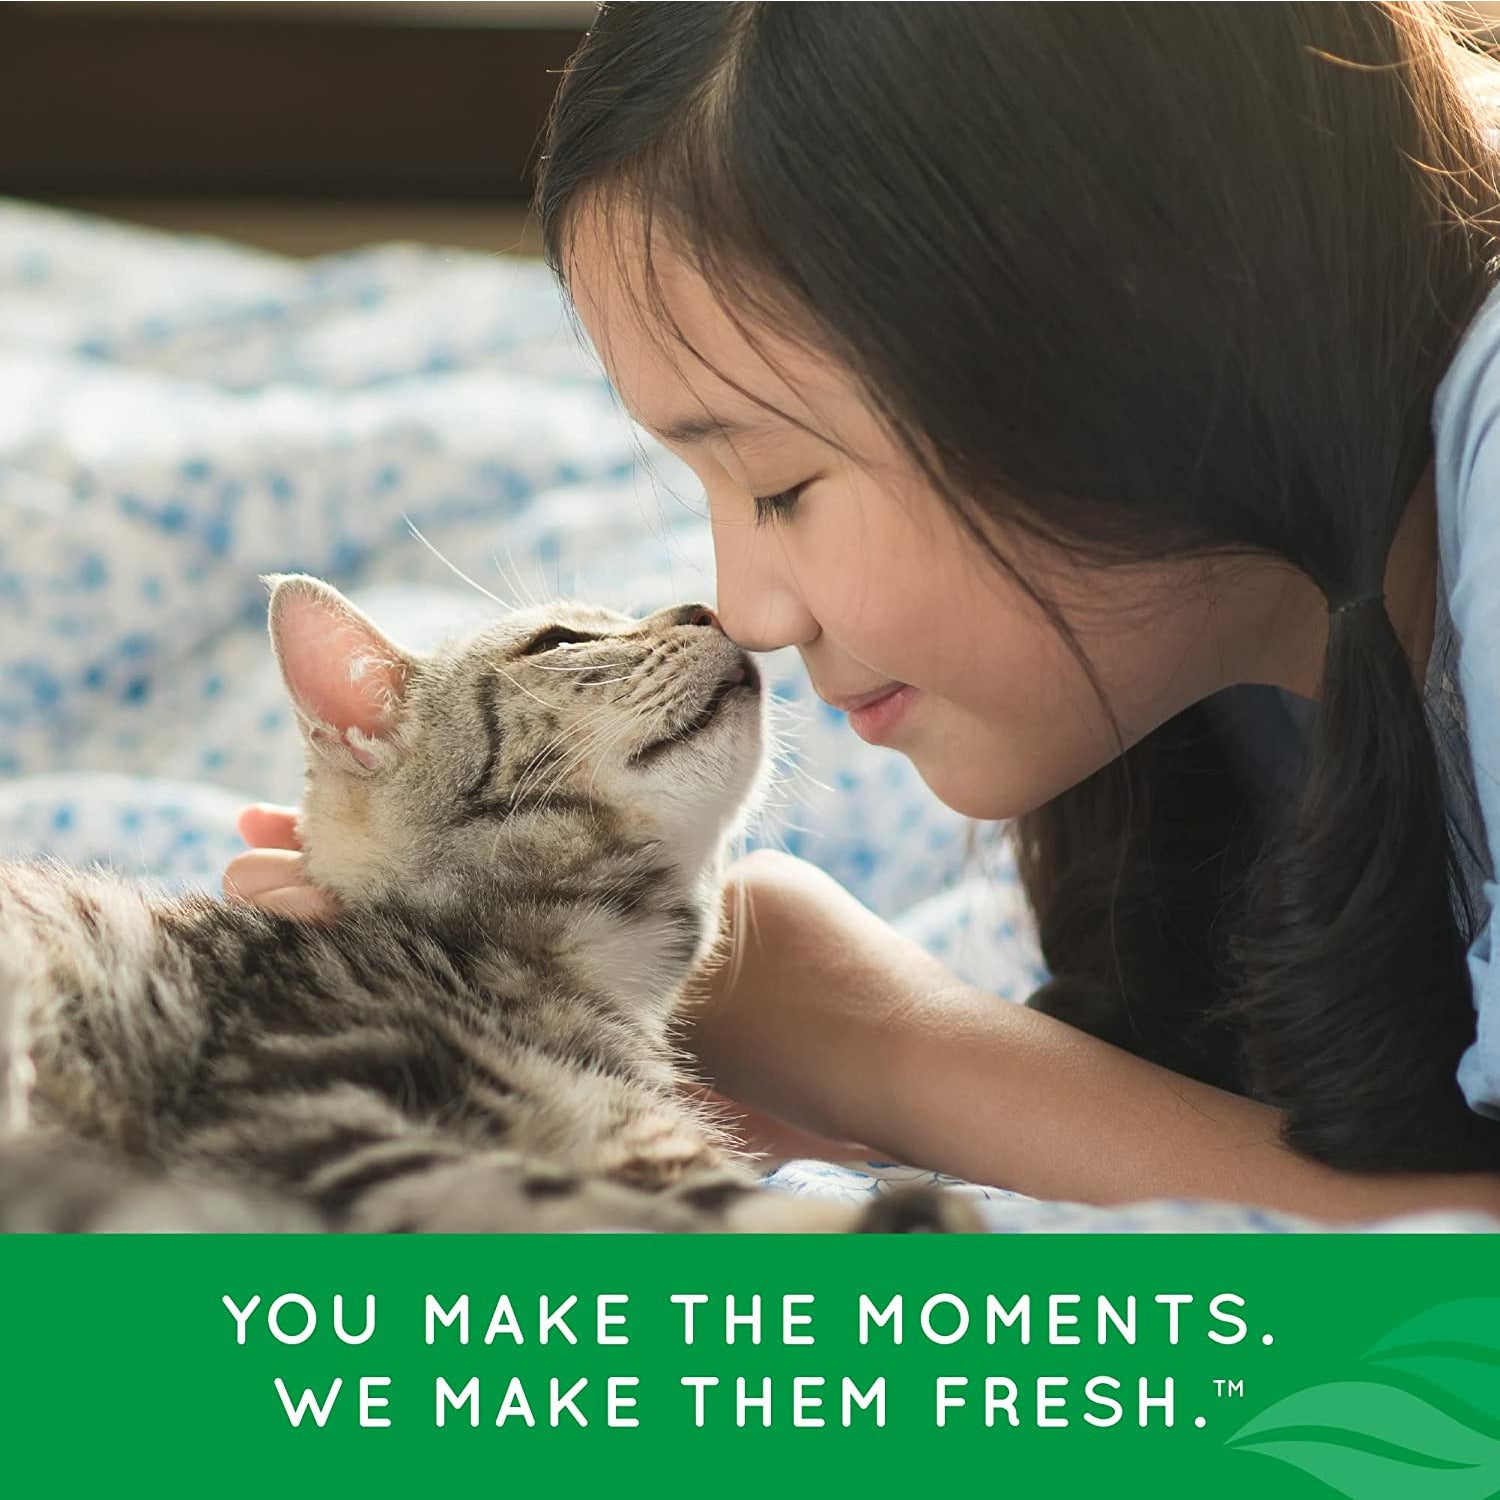 Tropiclean Cat Fresh Breath Water Additive  Cat Health Care  | PetMax Canada